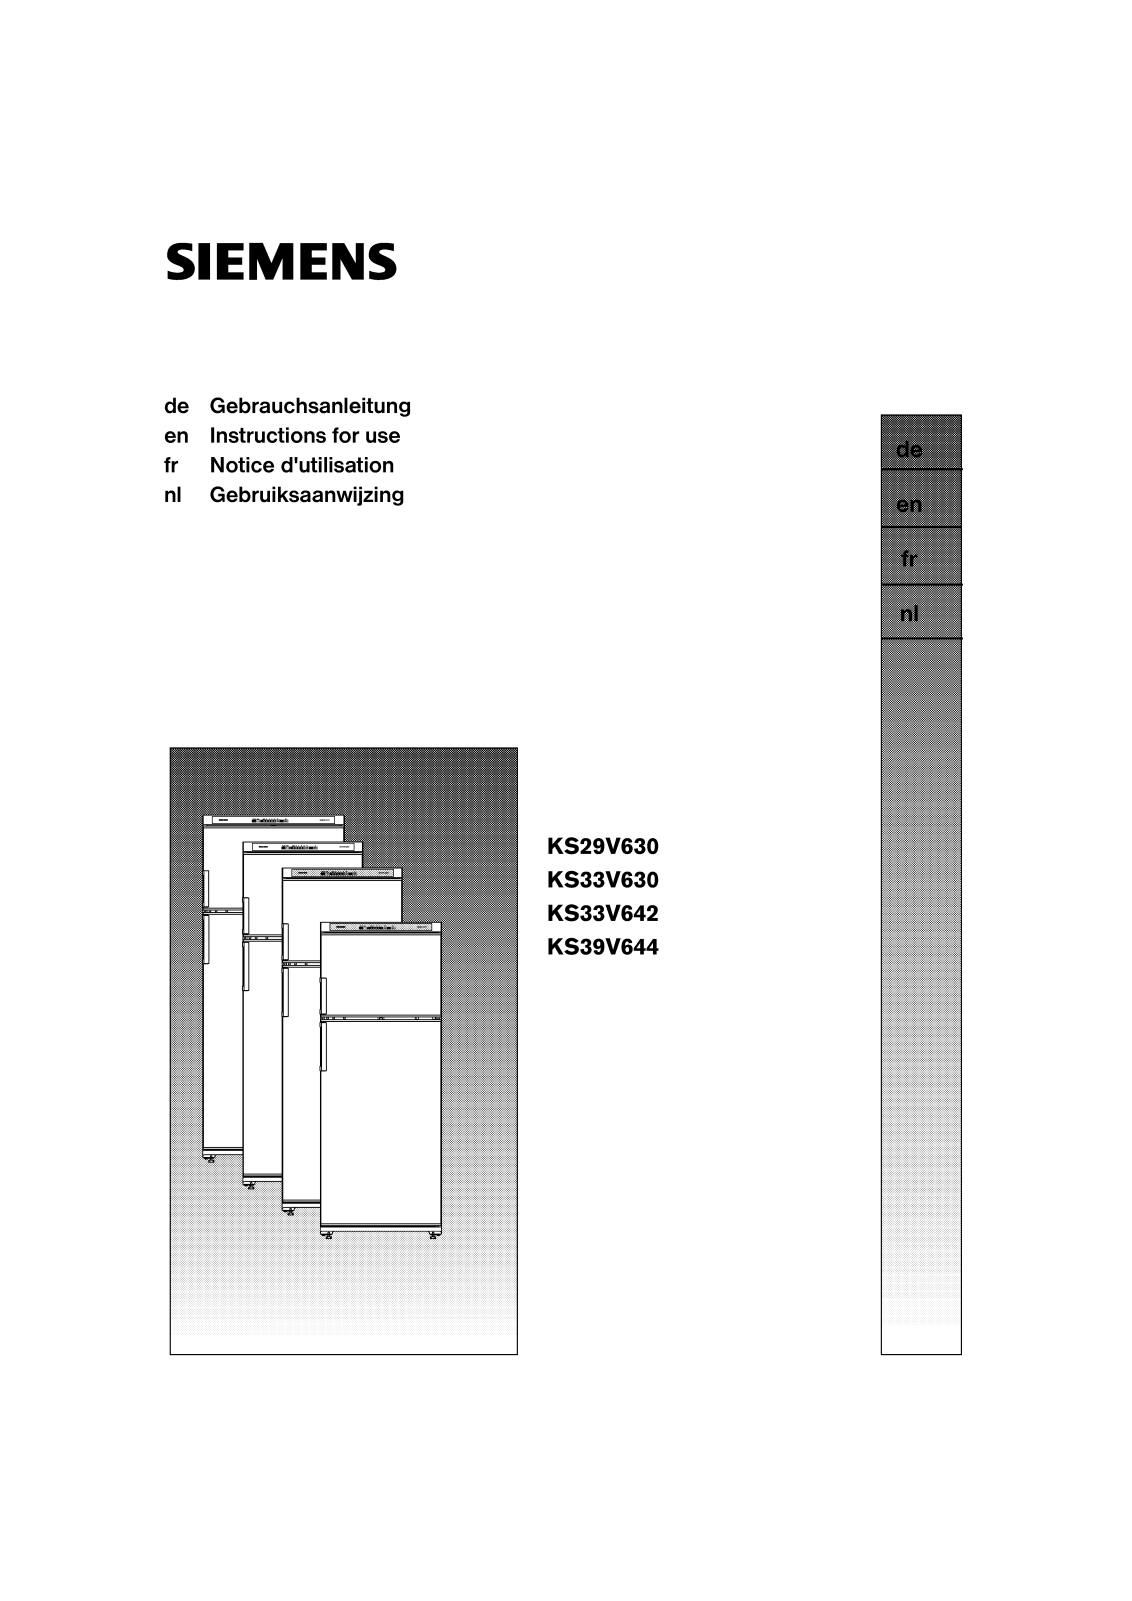 SIEMENS KS33V642 User Manual